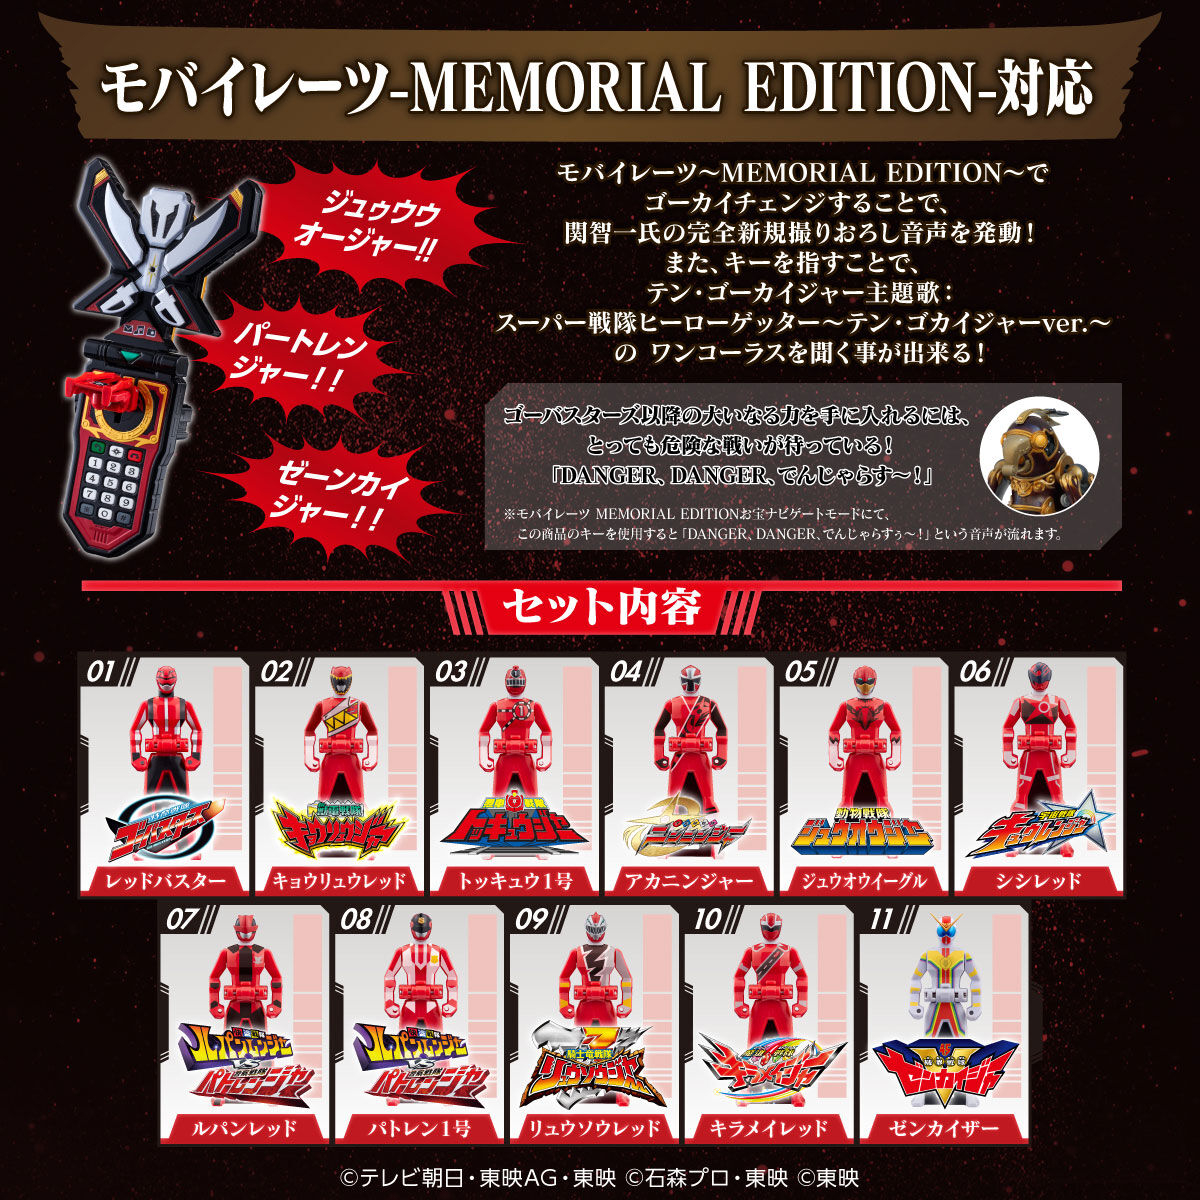 Ranger Key Memorial Edition - After Gokaiger Heroes Set